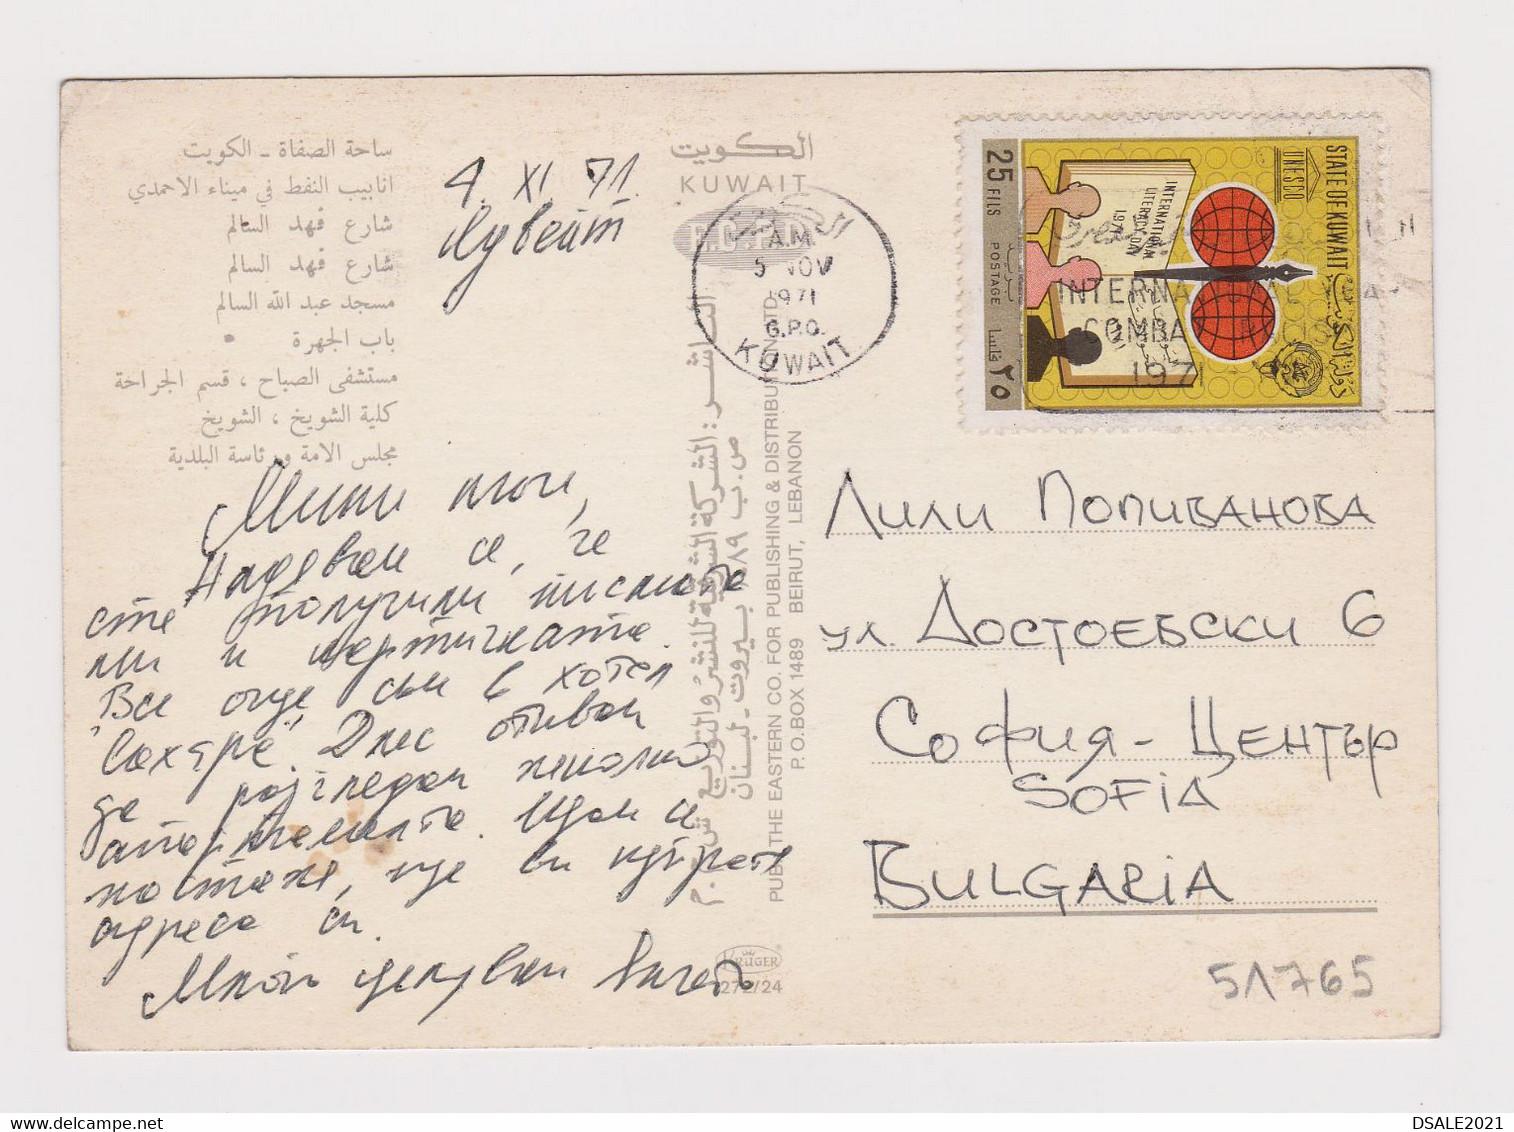 KUWAIT Vintage 1970s Multi View Photo Postcard CPA W/Nice Stamp To Bulgaria (51765) - Koweït